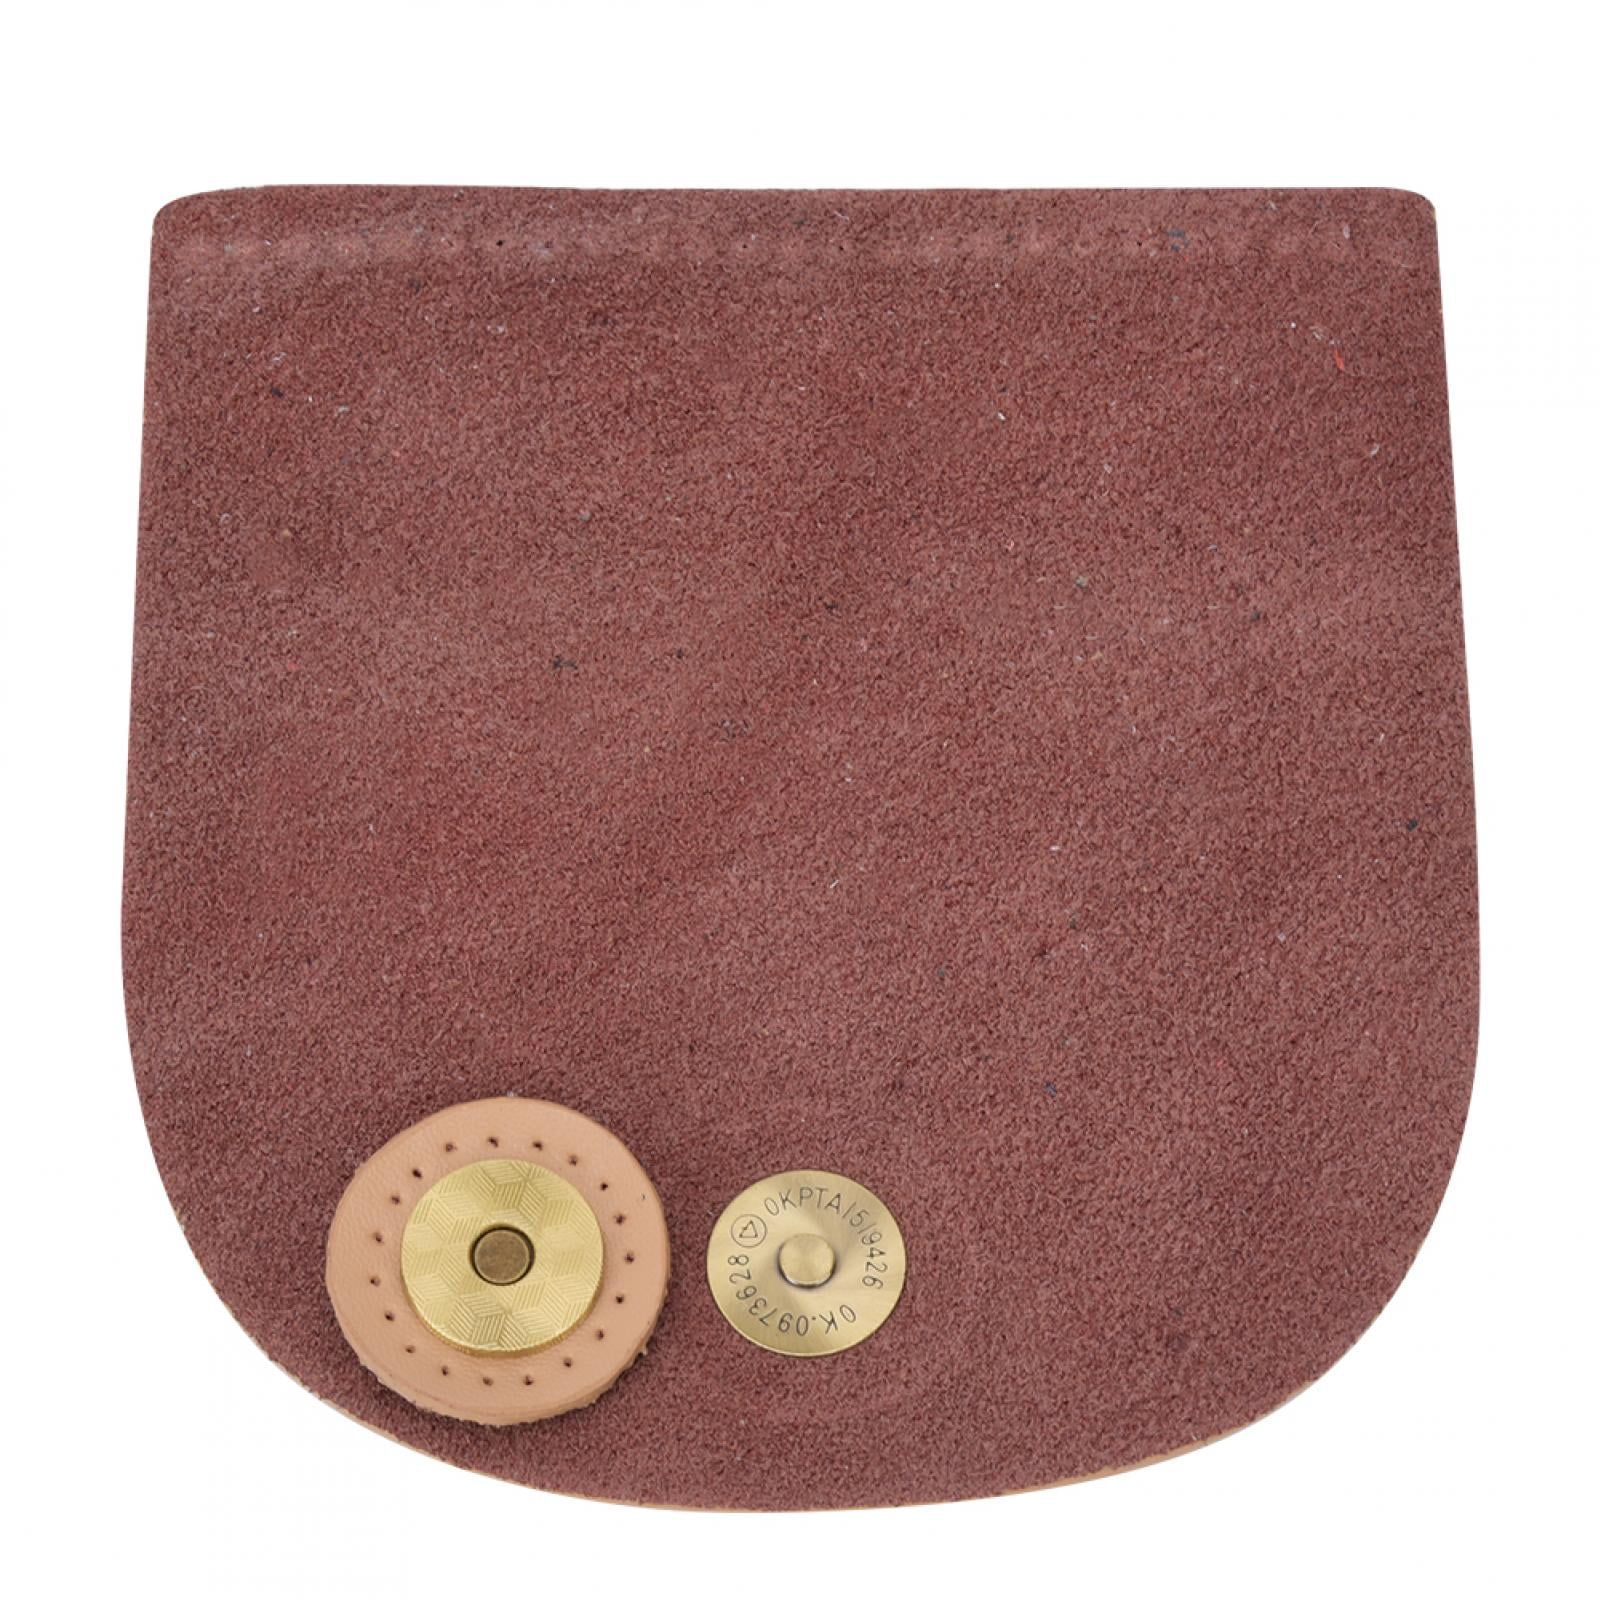 Handmade Magnet Buckle For Bag Luggage Handbag DIY Accessory 6 Pcs DEKOR 